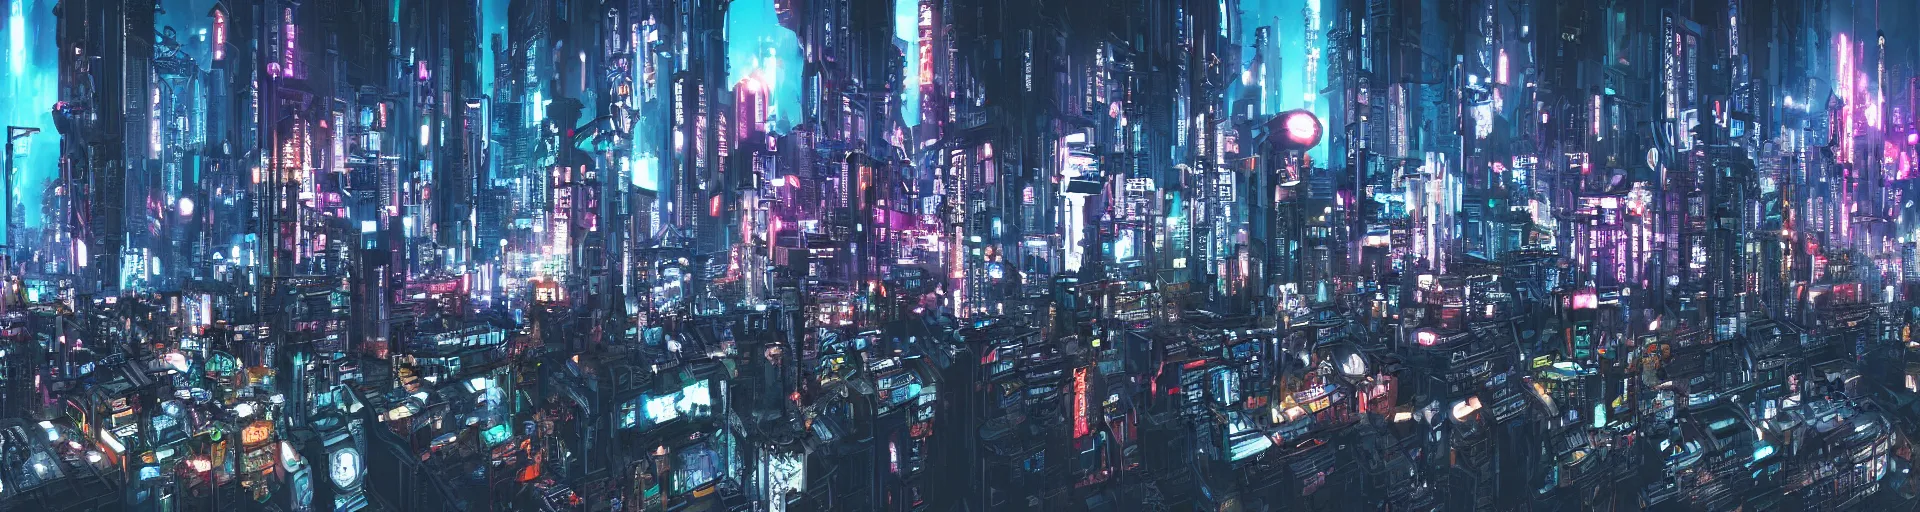 Prompt: a panorama image of a cyberpunk city scene